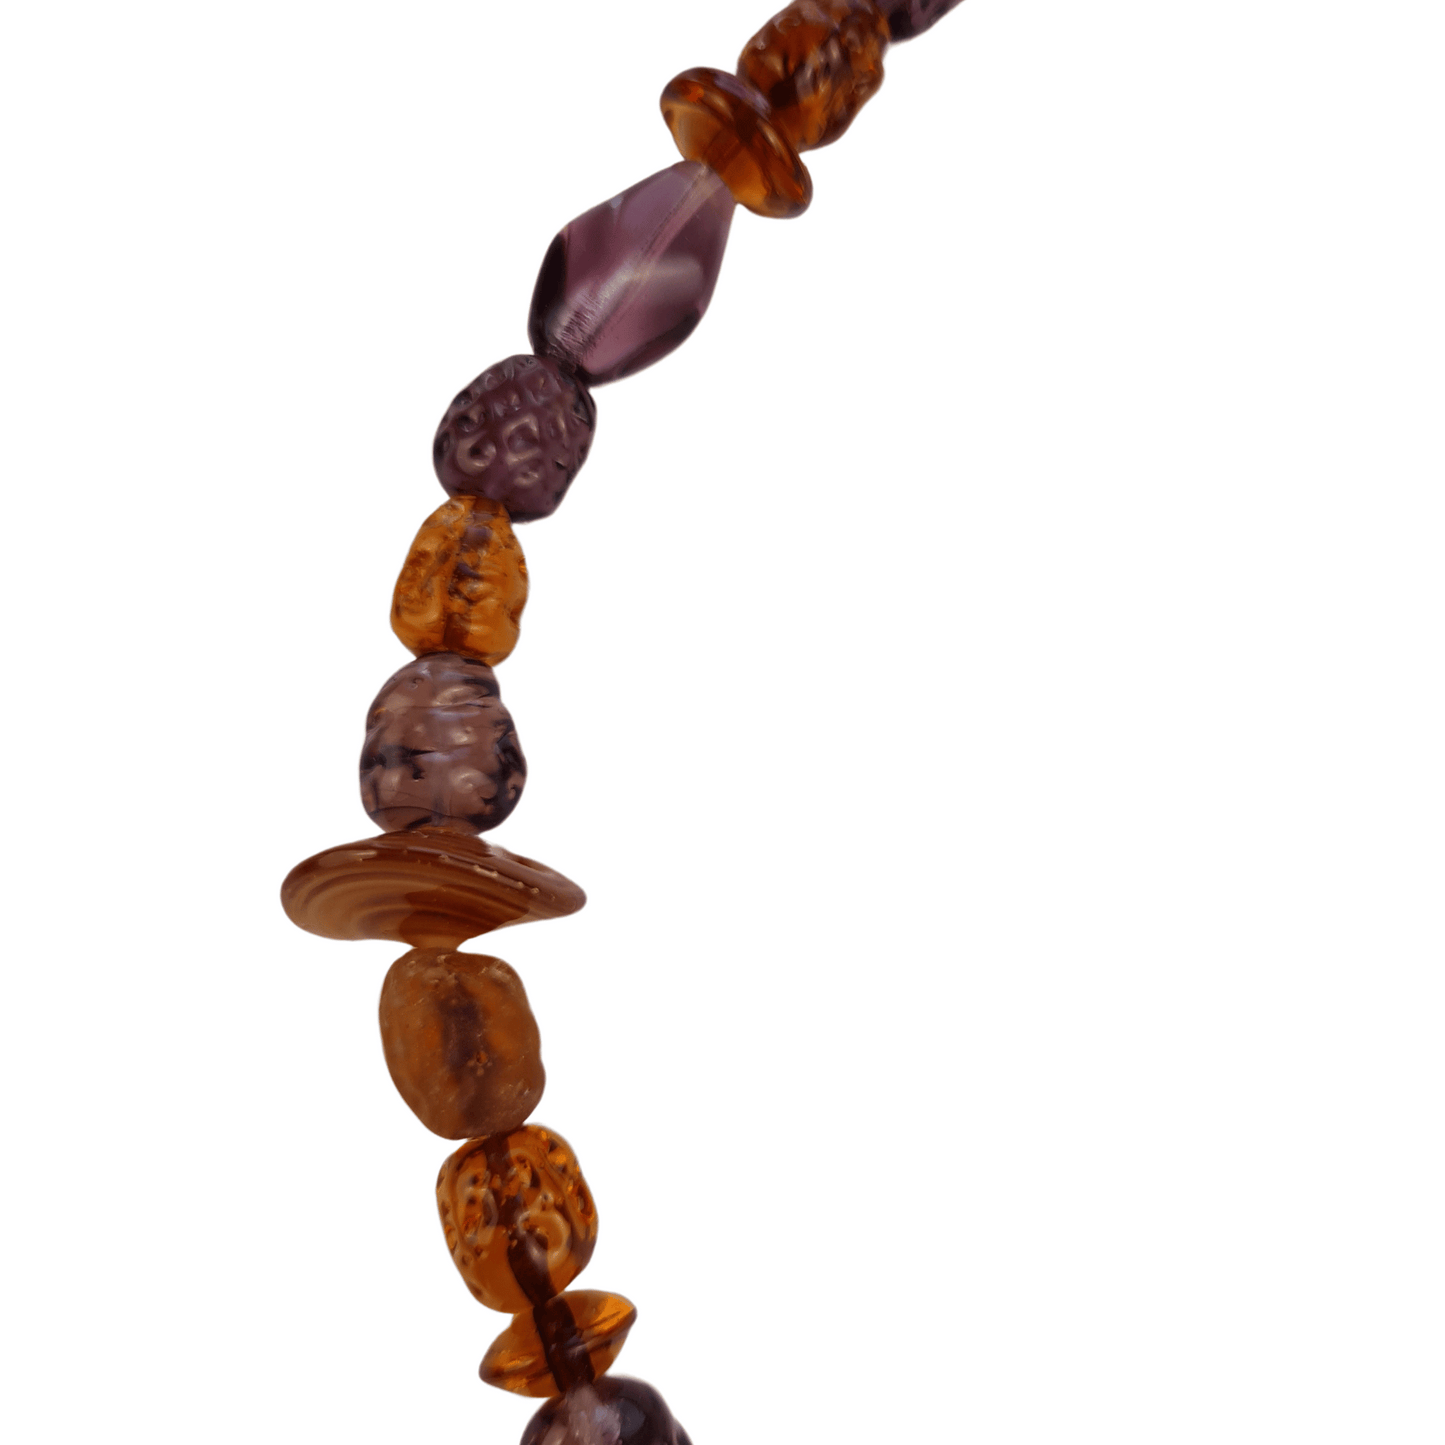 The Umbrellas Beads Necklace